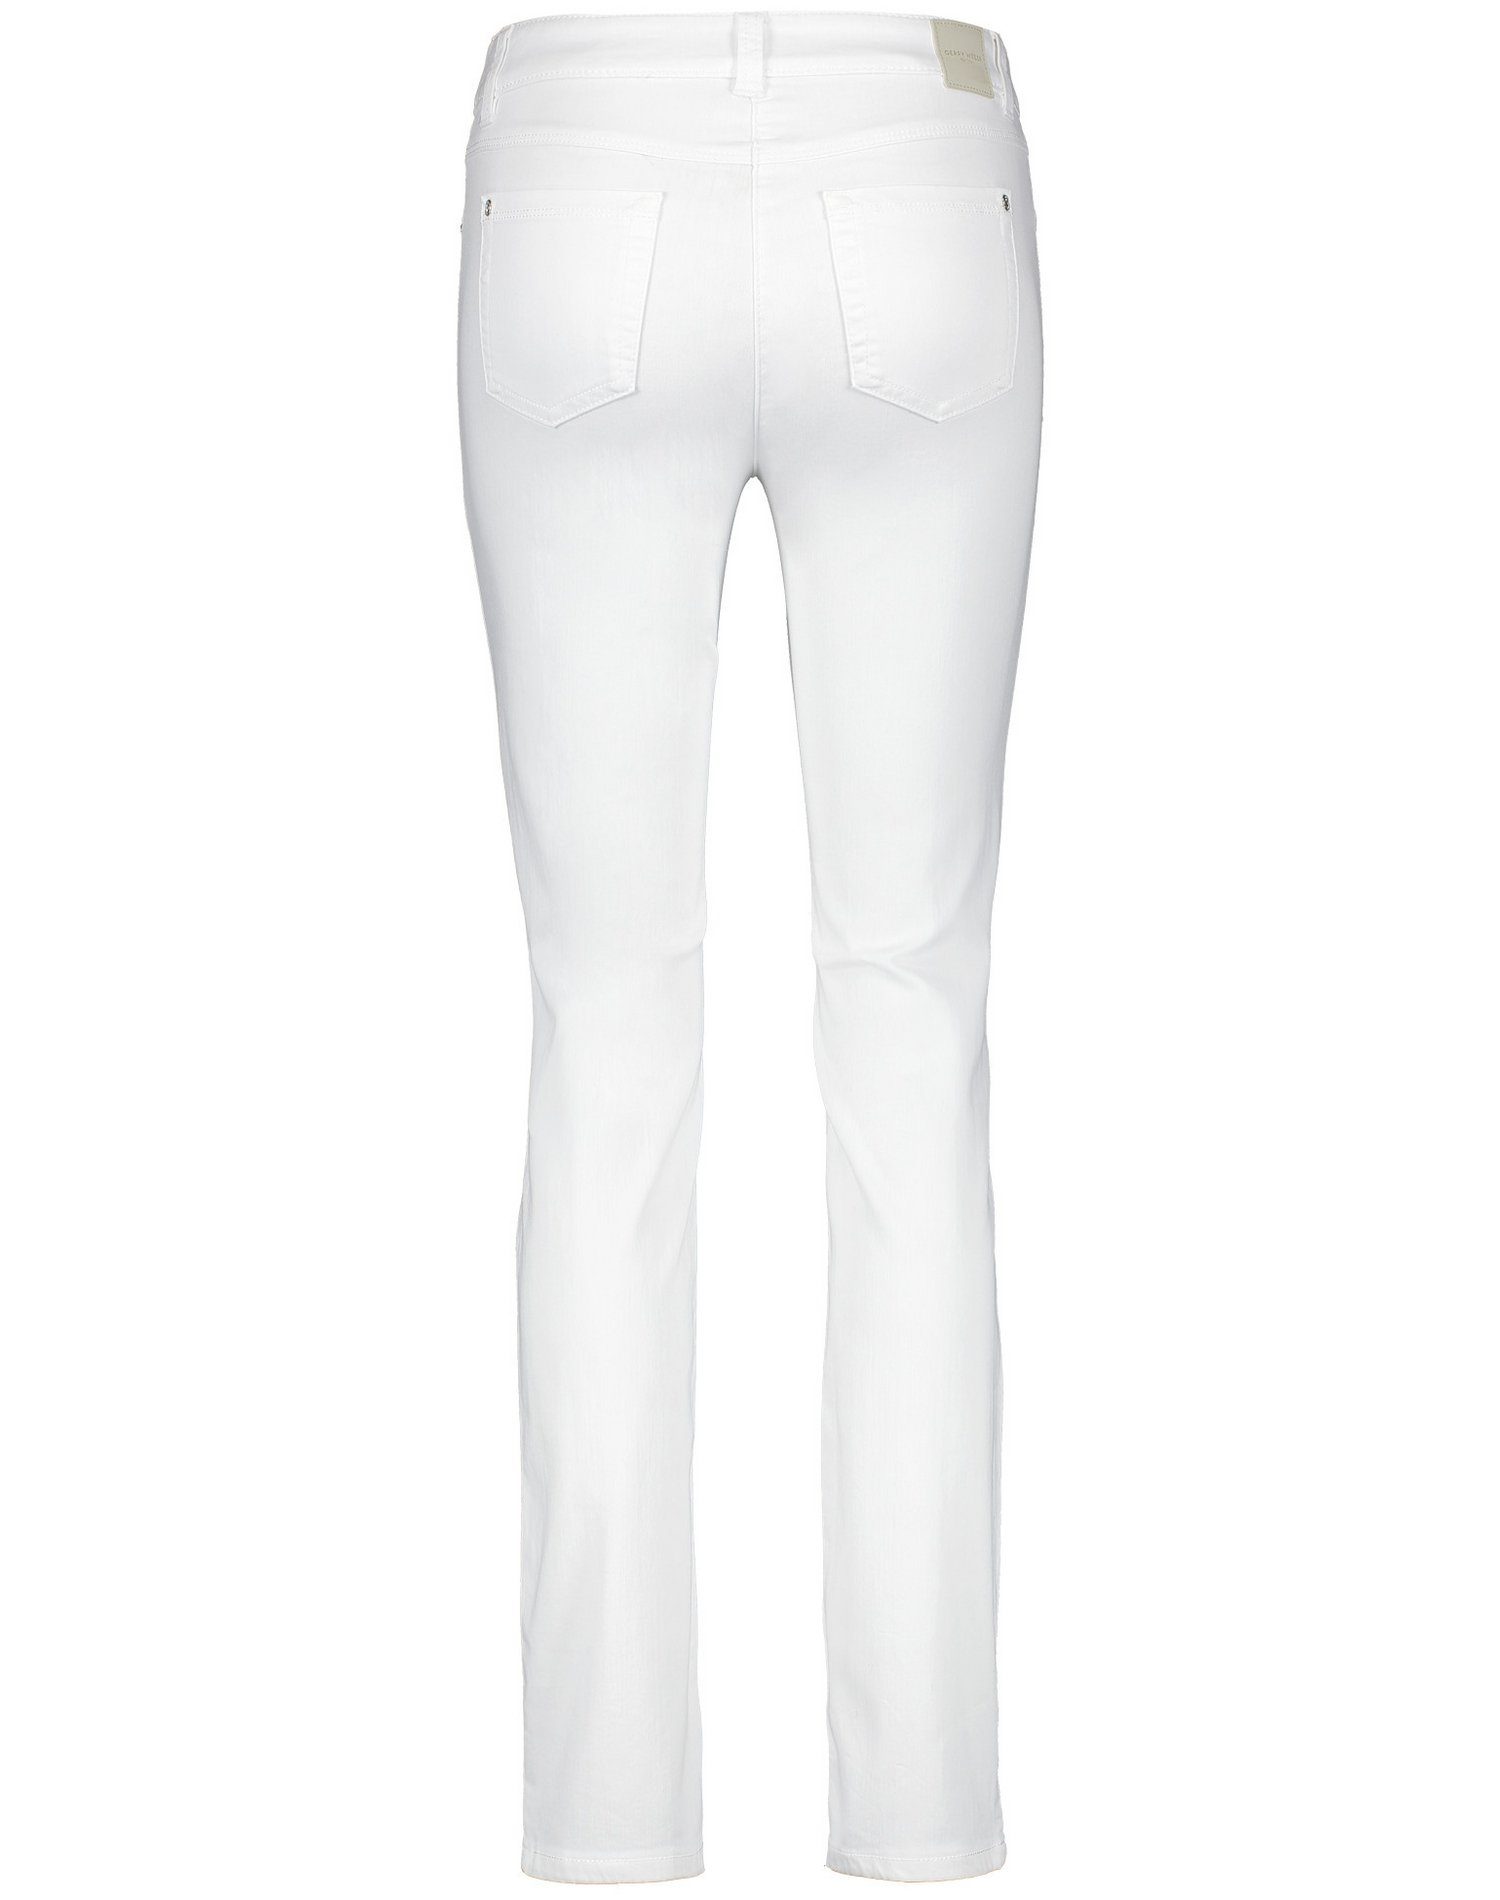 GERRY WEBER Best4me Hose Stretch-Jeans 5-Pocket weiß/weiß Figurformende